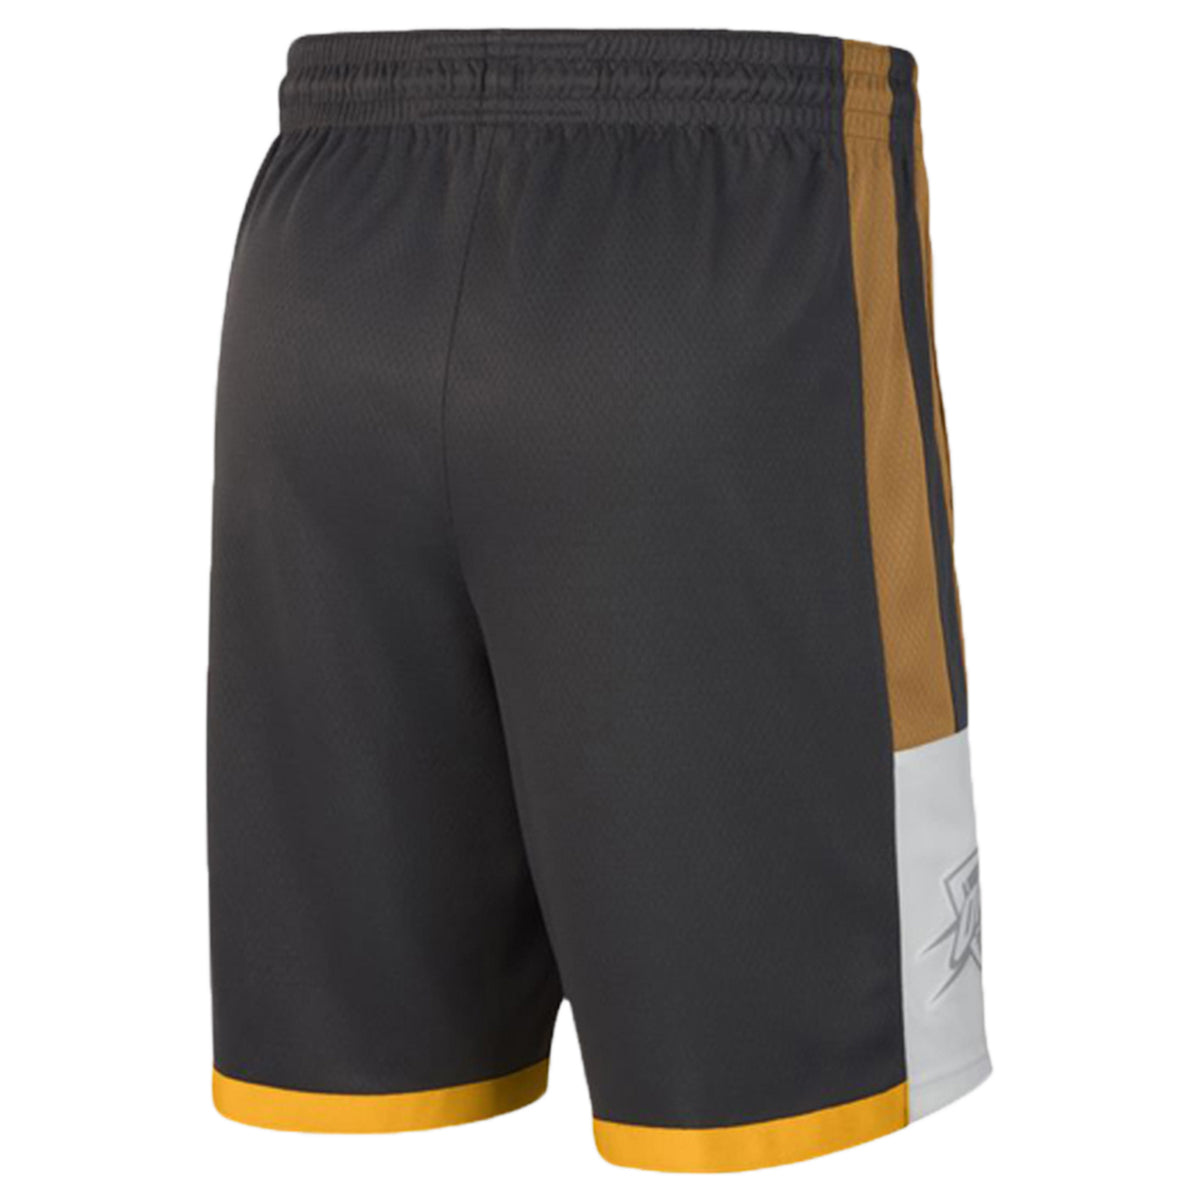 Nike Oklahoma City Thunder Dri-fit City Edition Swingman Shorts Mens Style : Bv5881